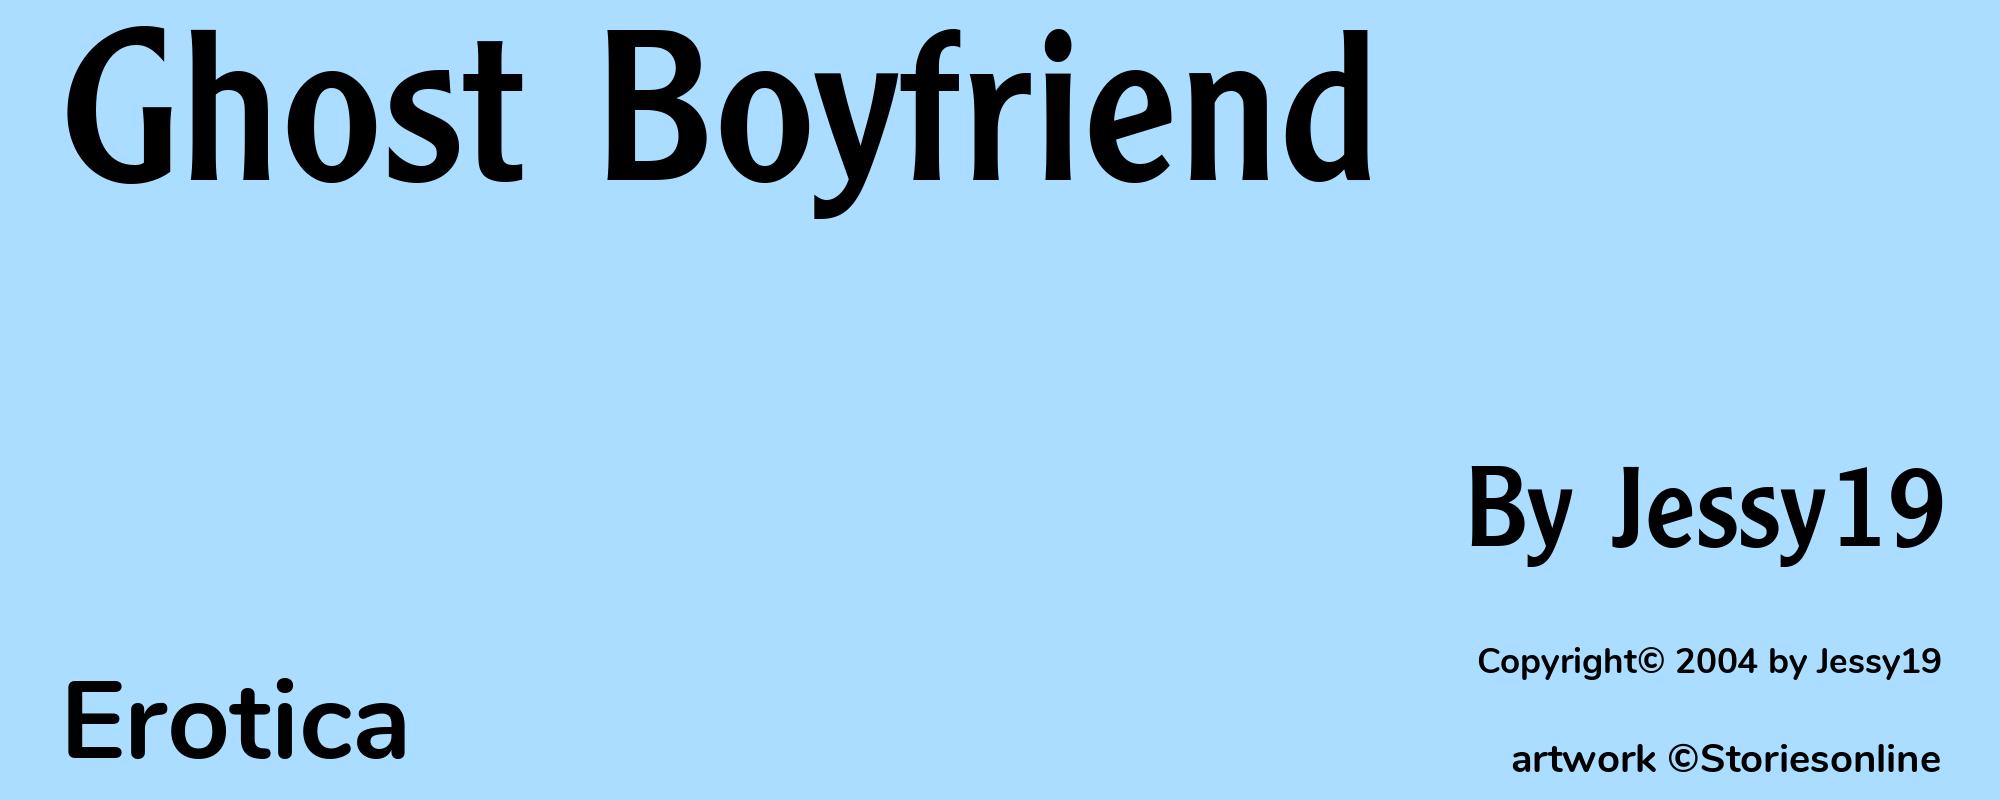 Ghost Boyfriend - Cover